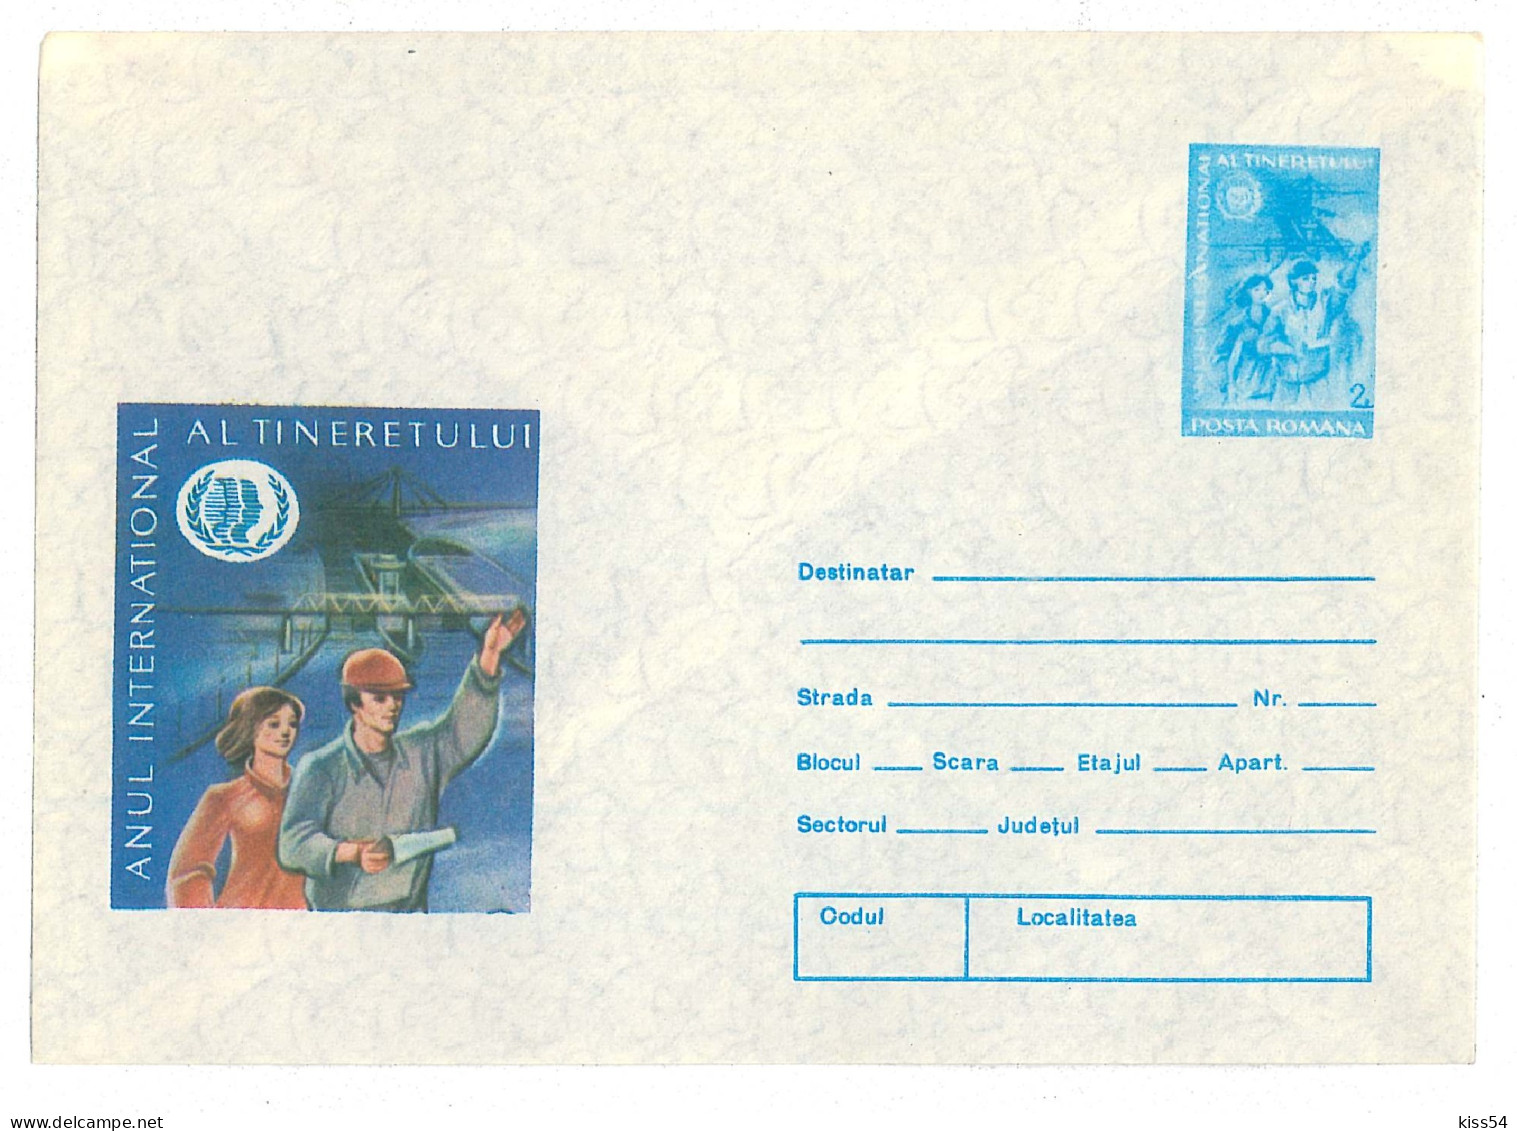 IP 85 - 71 International Year Of Youth, Danube & Ship, Romania - Stationery - Unused - 1985 - UNICEF